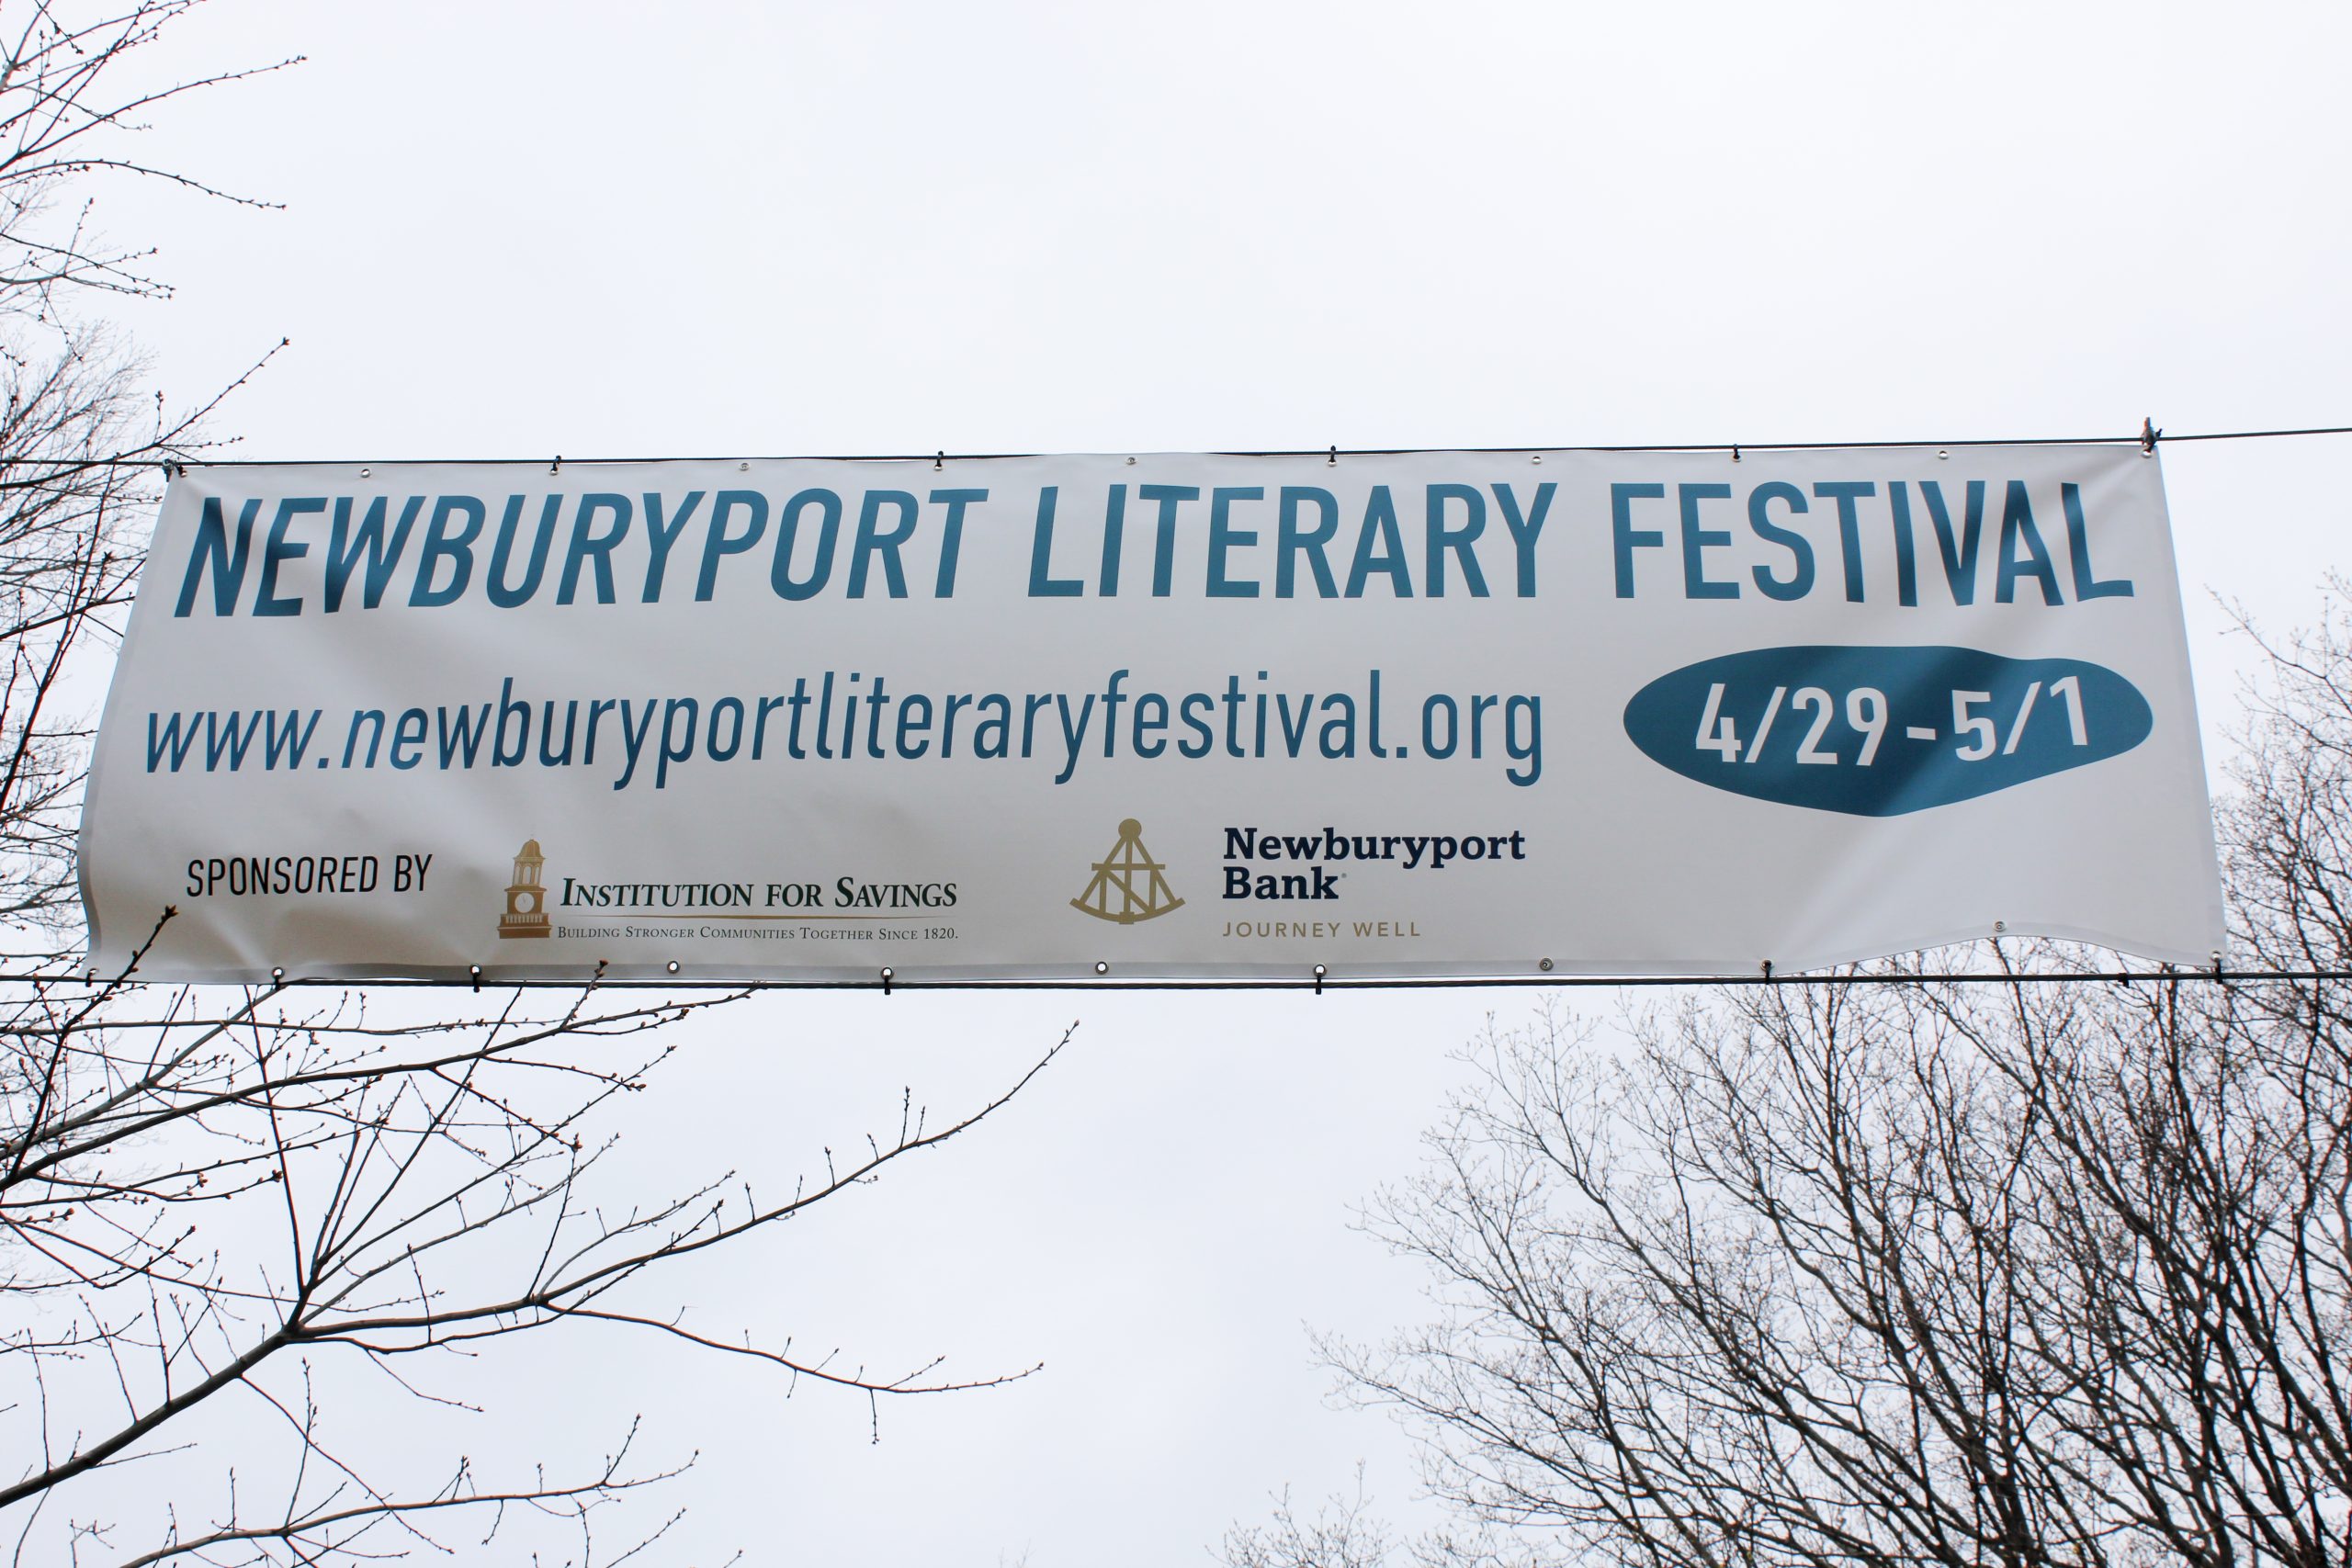 Newburyport Literary Festival Kicks Off Again This Weekend The Town